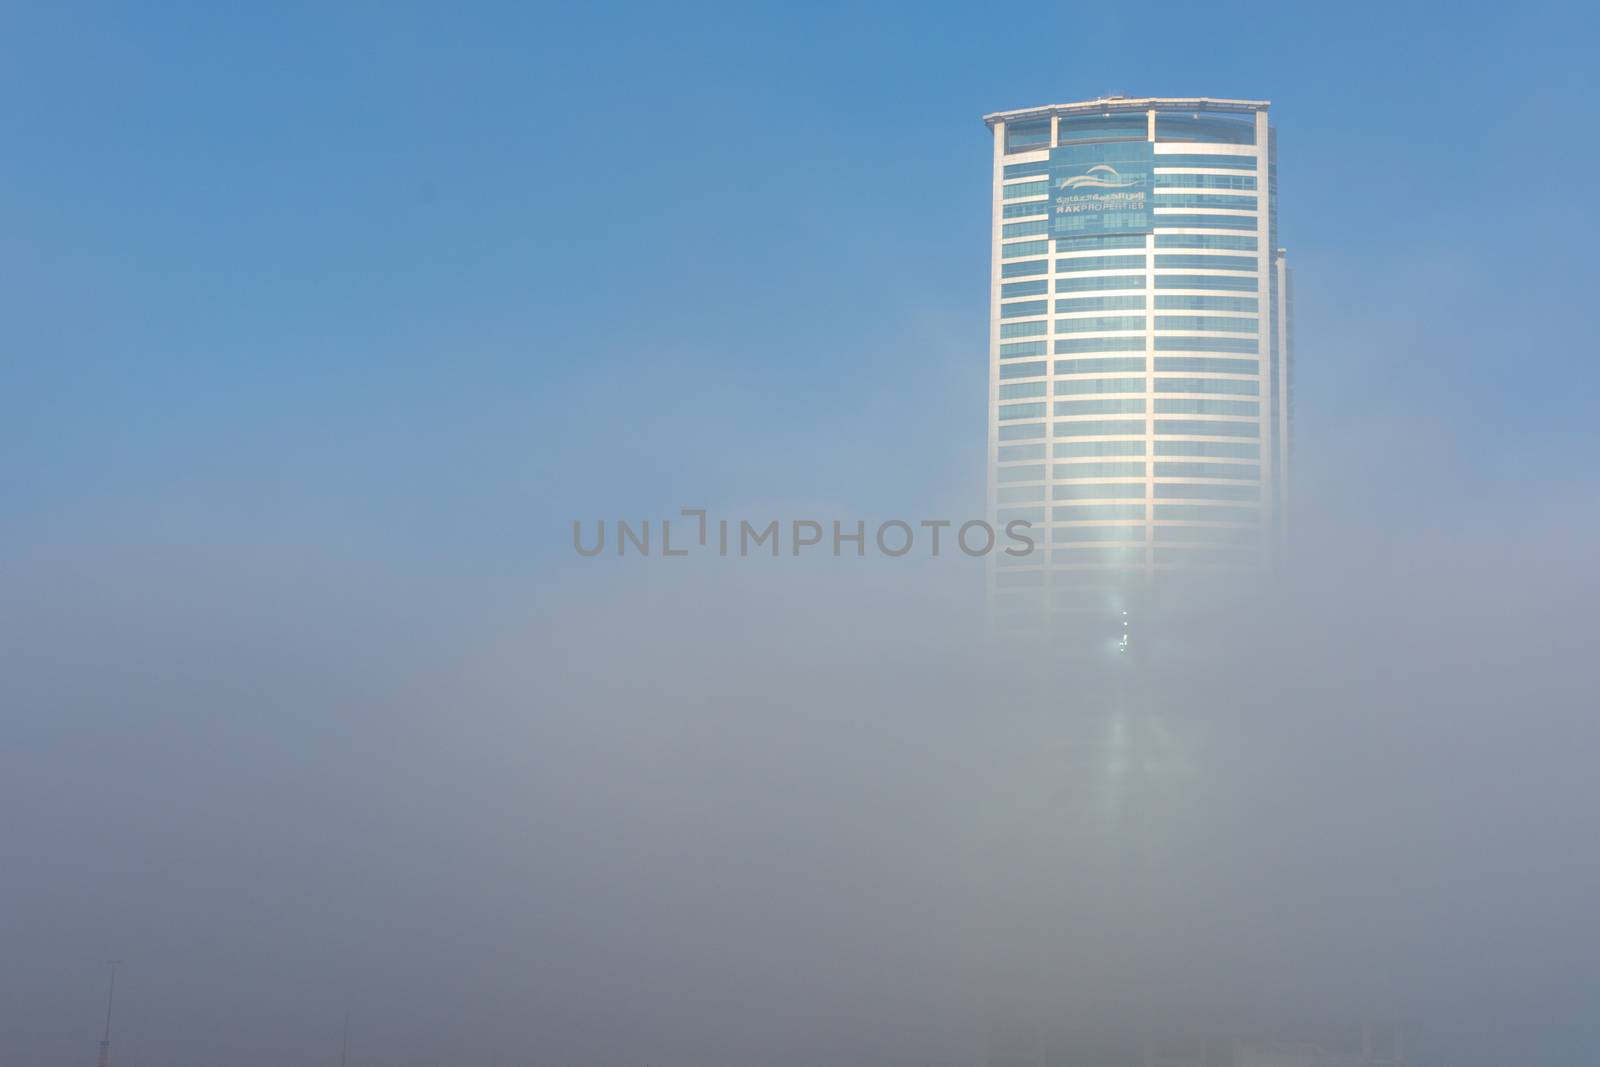 "RAK, RAK/UAE - 10/5/2018 Ras Al Khaimah City in the United Arab Emirates in the early morning fog. Julphur Towers, RAK Properties, peeks above the clouds into the blue sky."